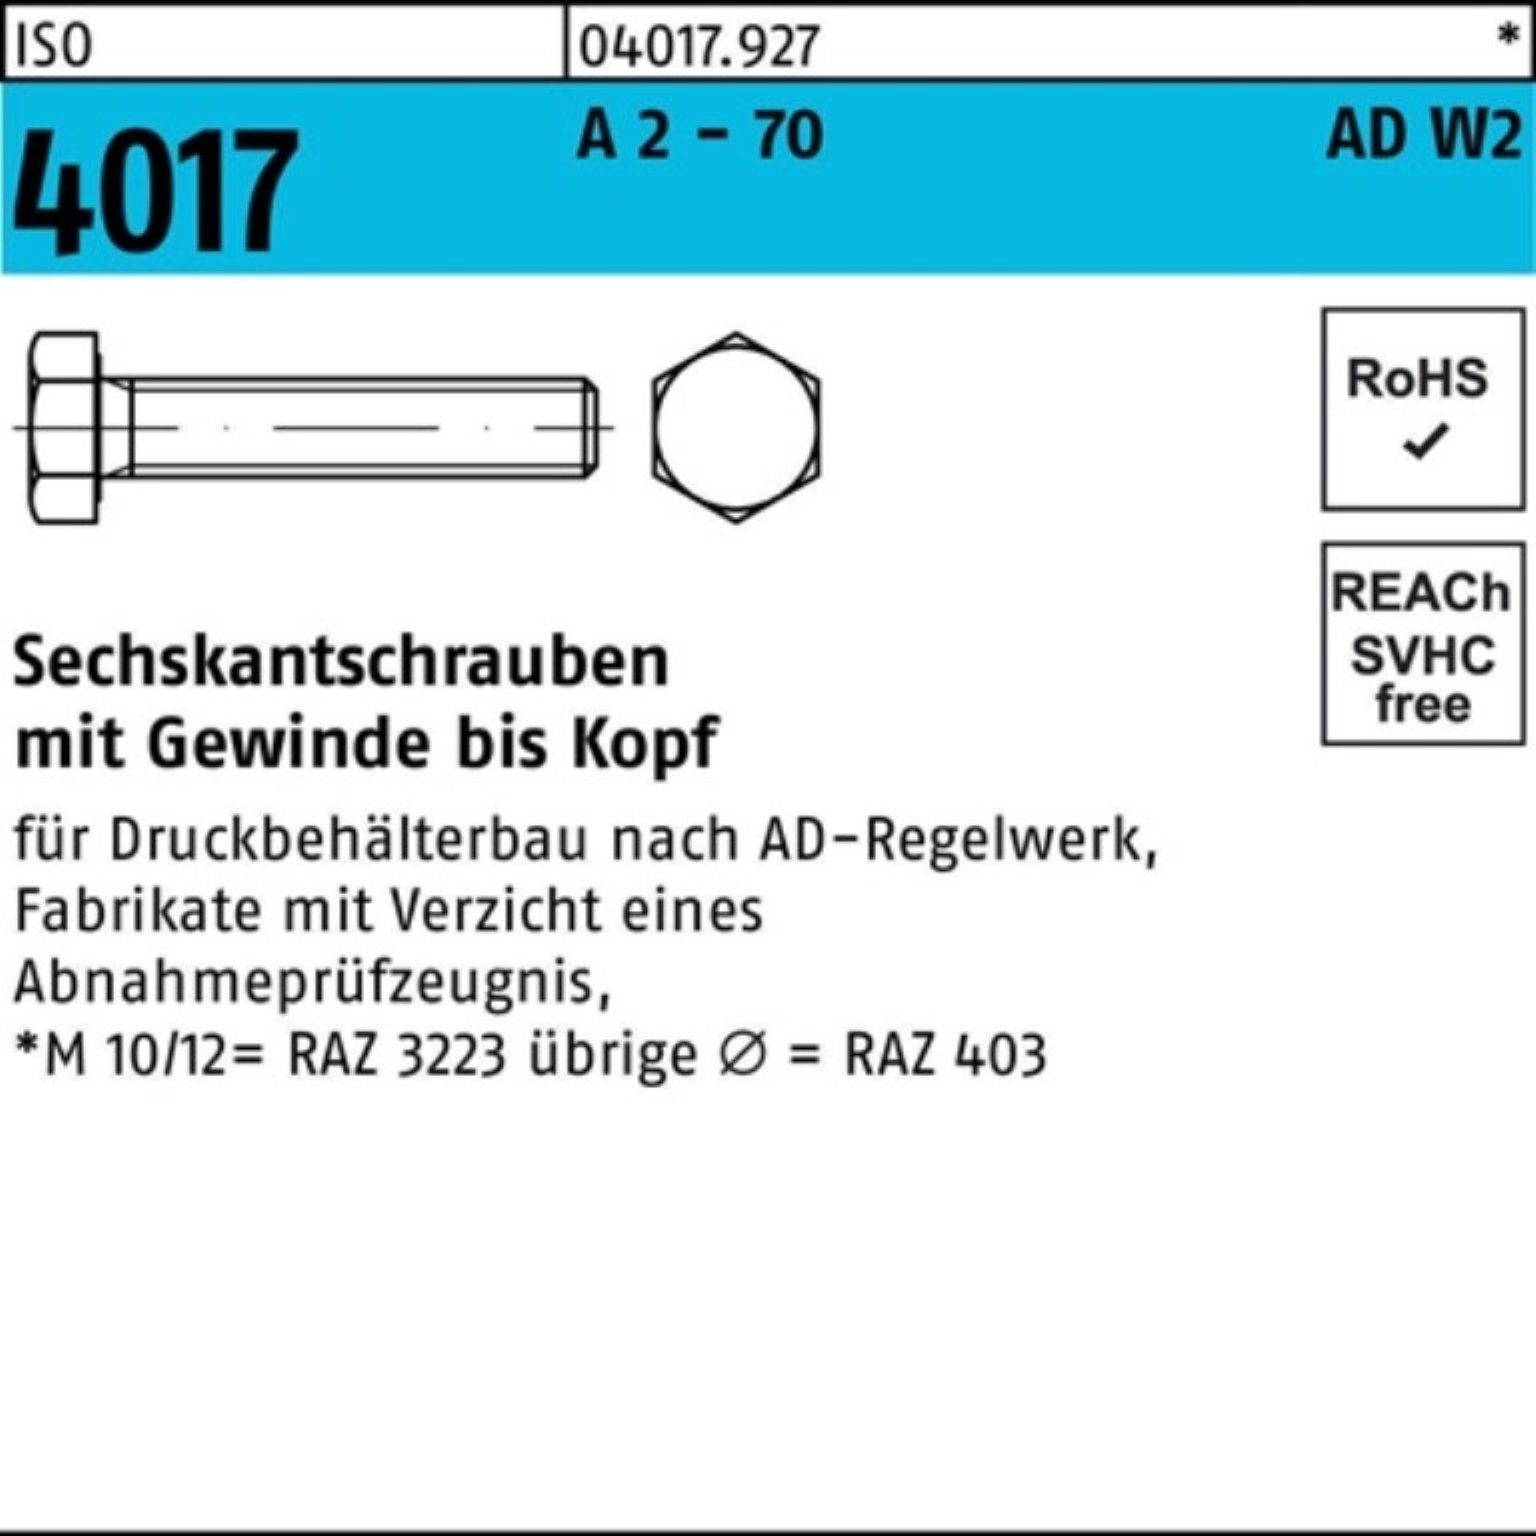 Bufab Sechskantschraube 100er Pack 2 70 - A 4017 Sechskantschraube 50 ISO 65 VG M12x AD-W2 St